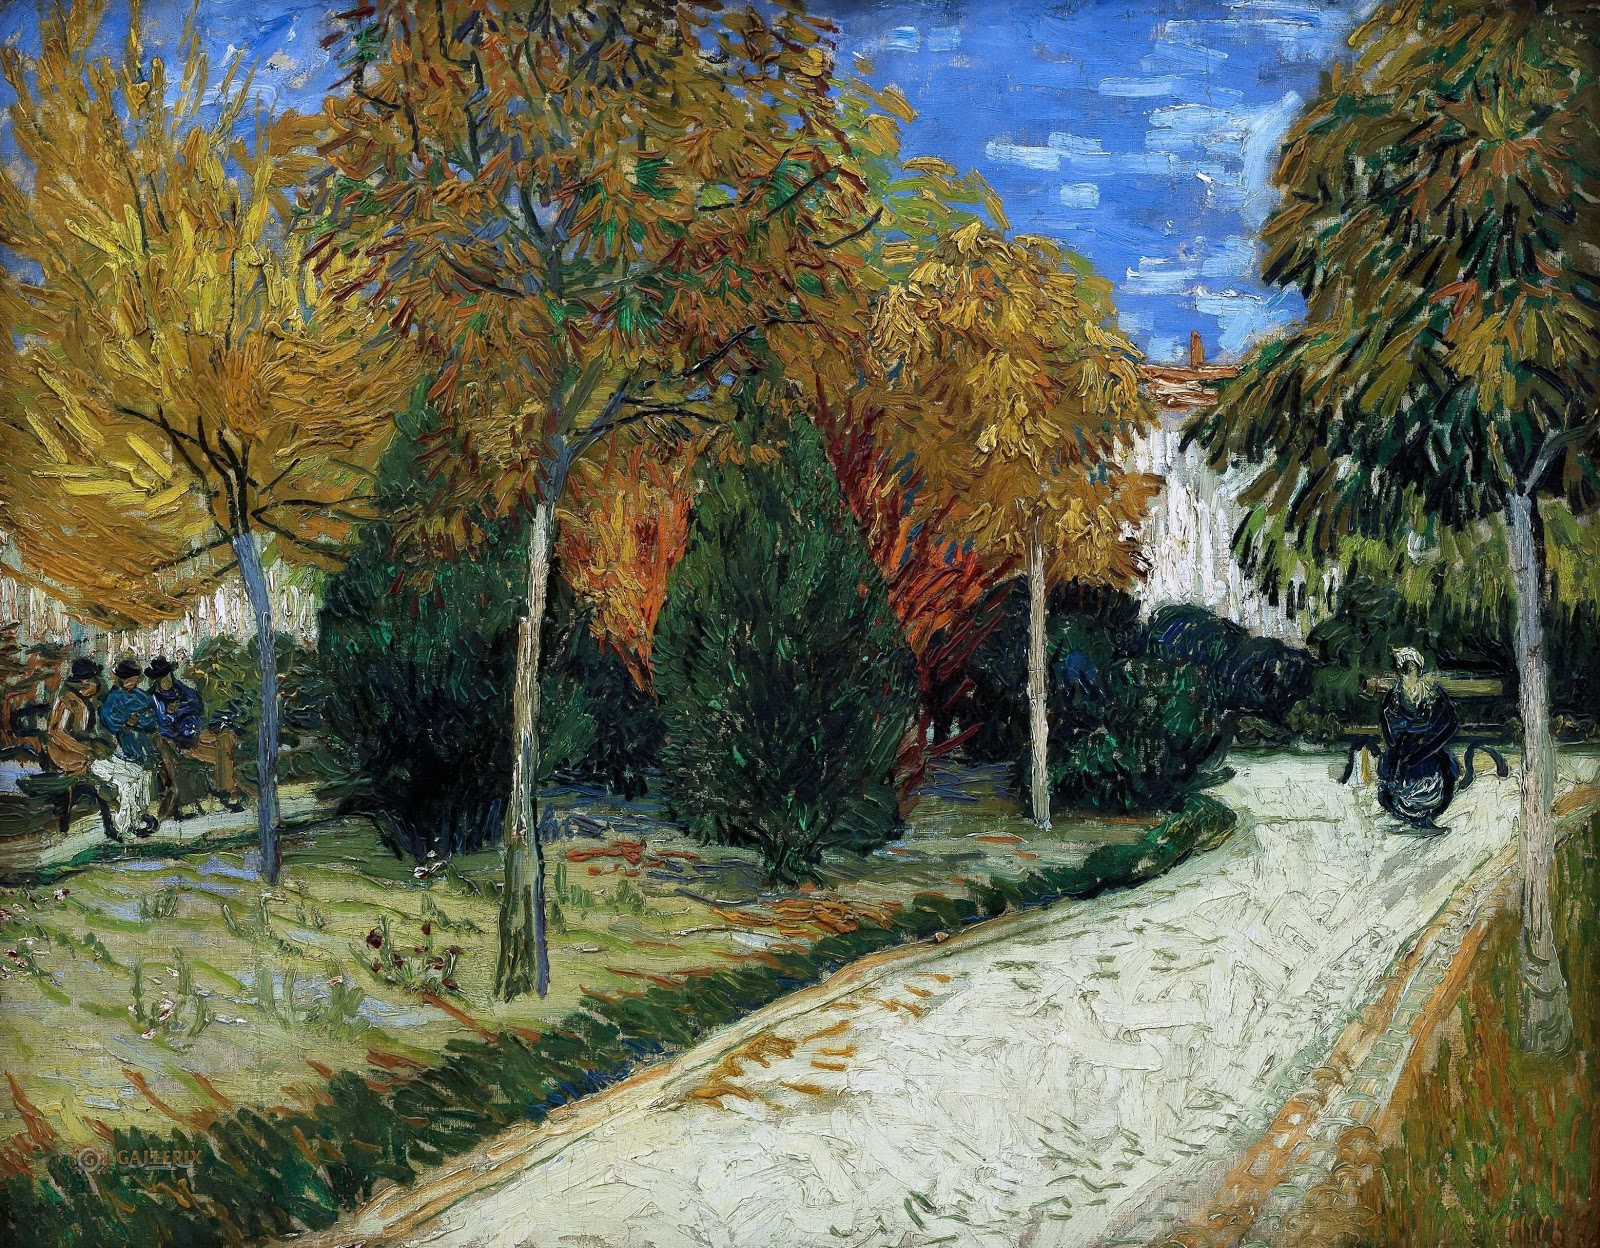 Vincent+Van+Gogh-1853-1890 (878).jpg